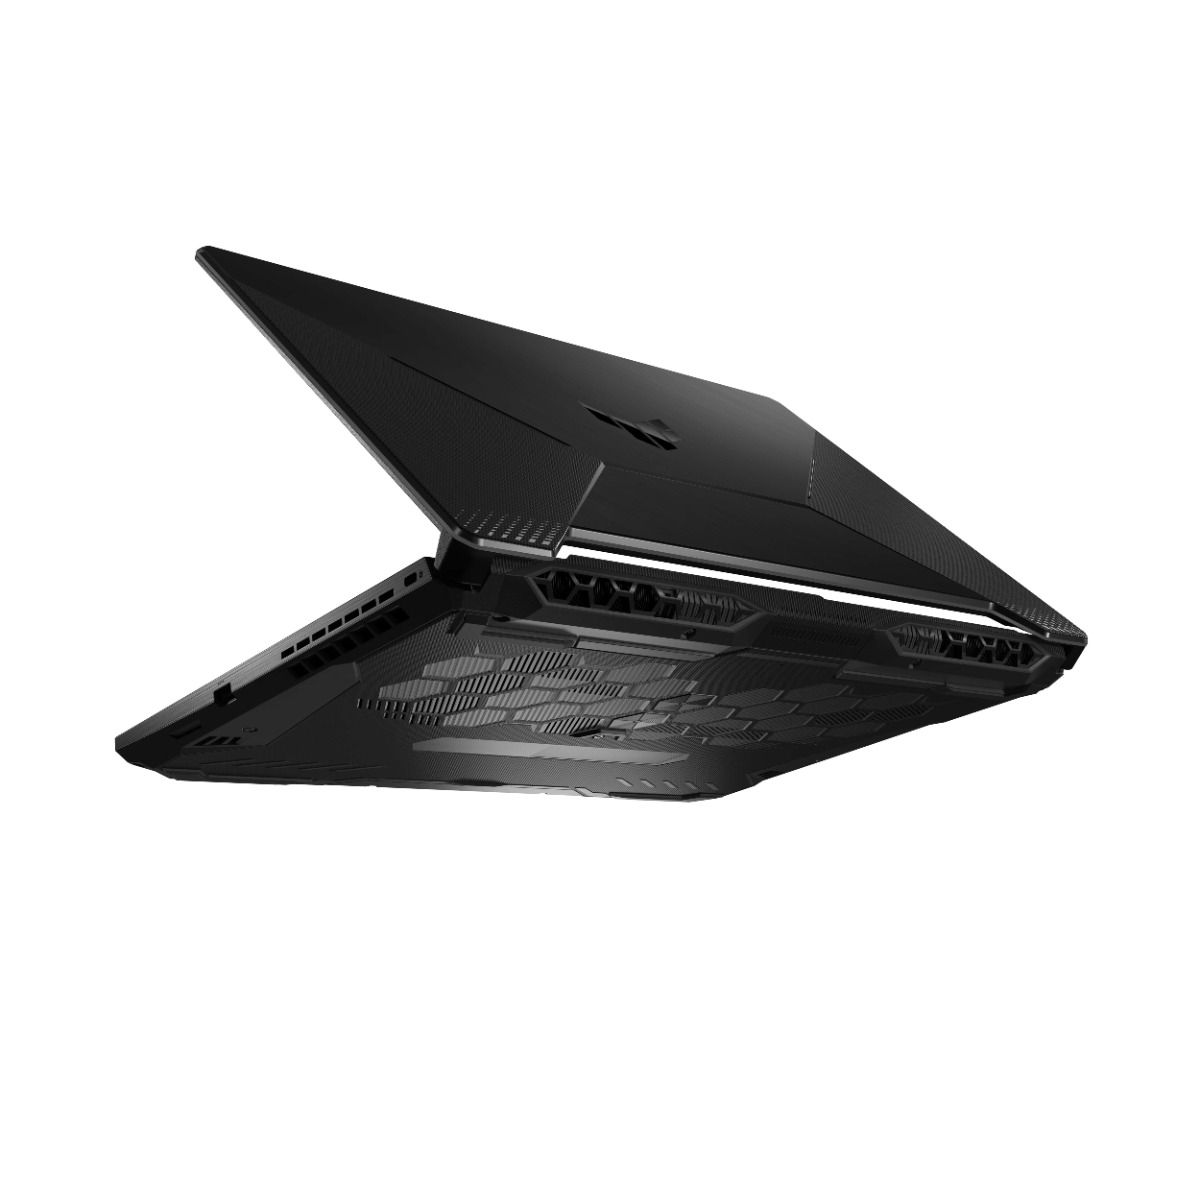 Asus TUF Gaming F15 FX506HF 15.6" Laptop i5 11th Gen 16GB RAM 512GB SSD RTX 2050